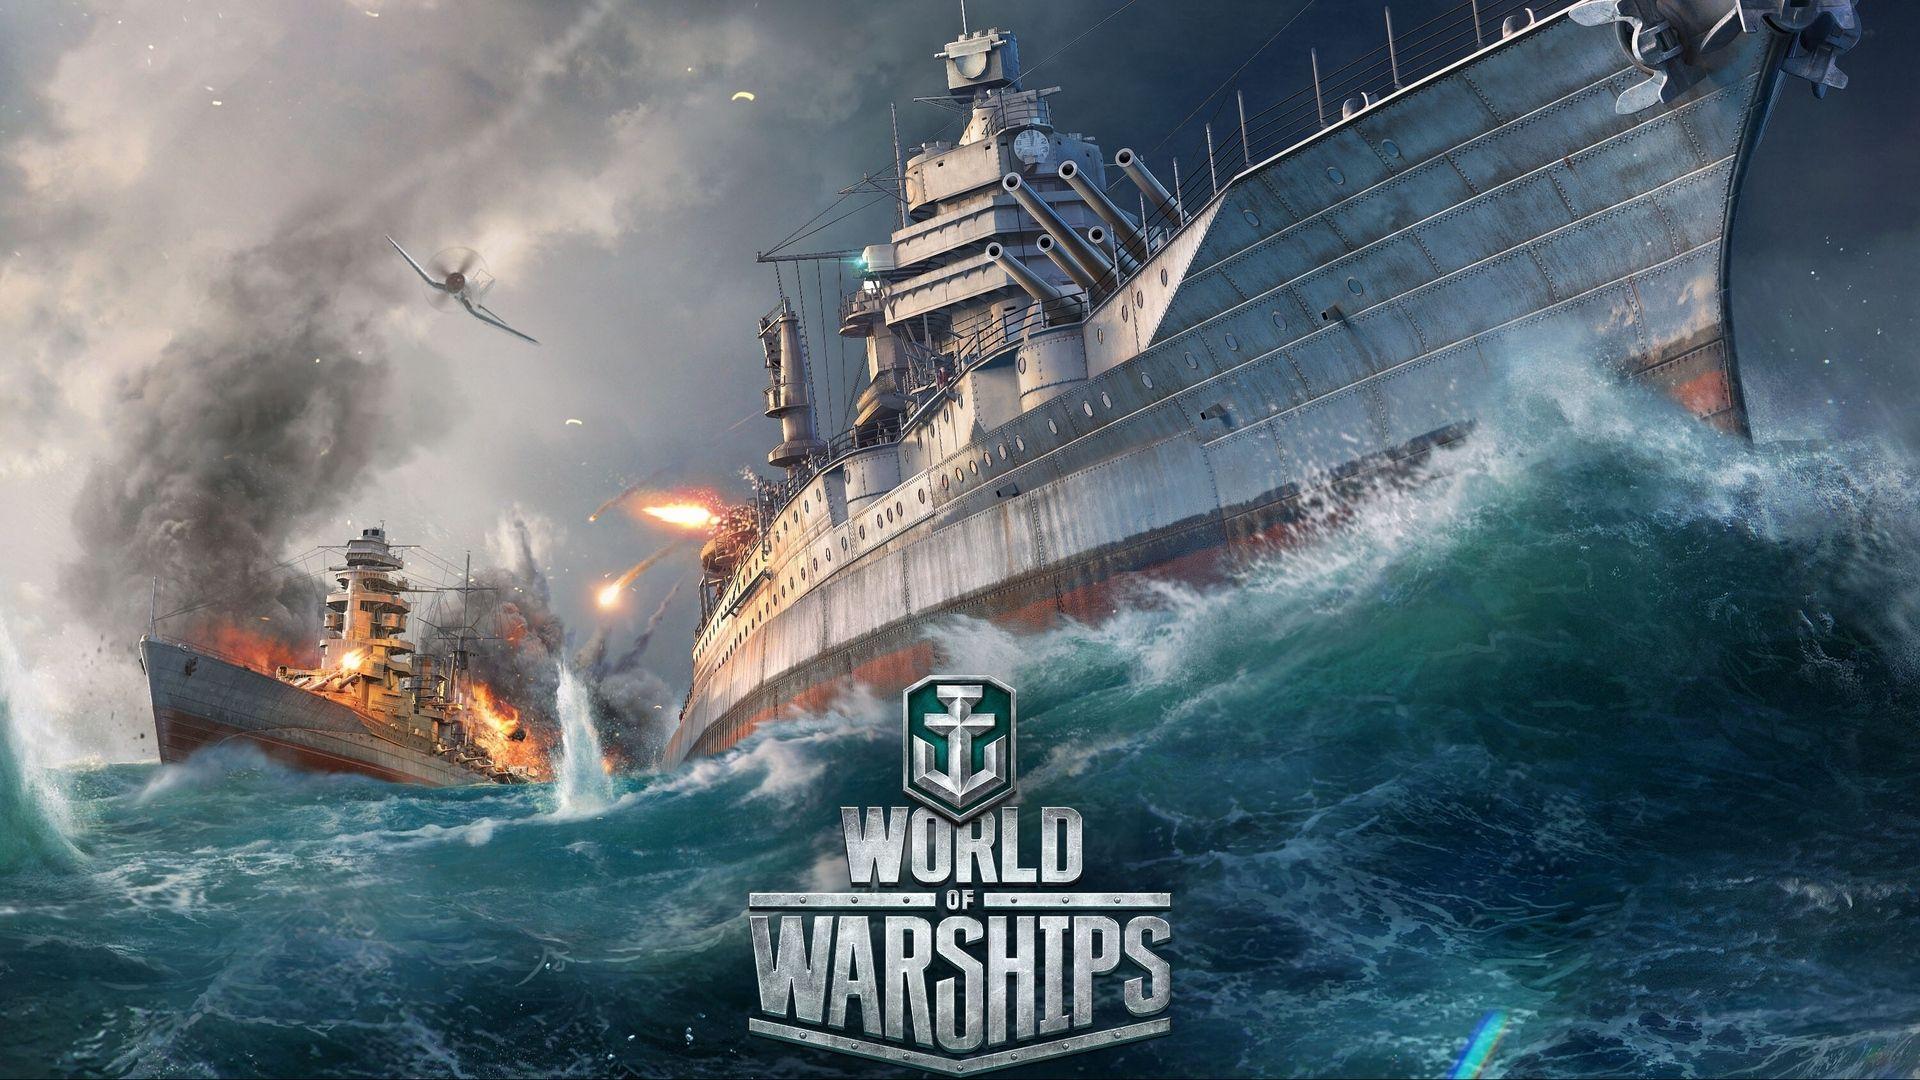 Download wallpaper 1920x1080 world of warships, ship, explosion full